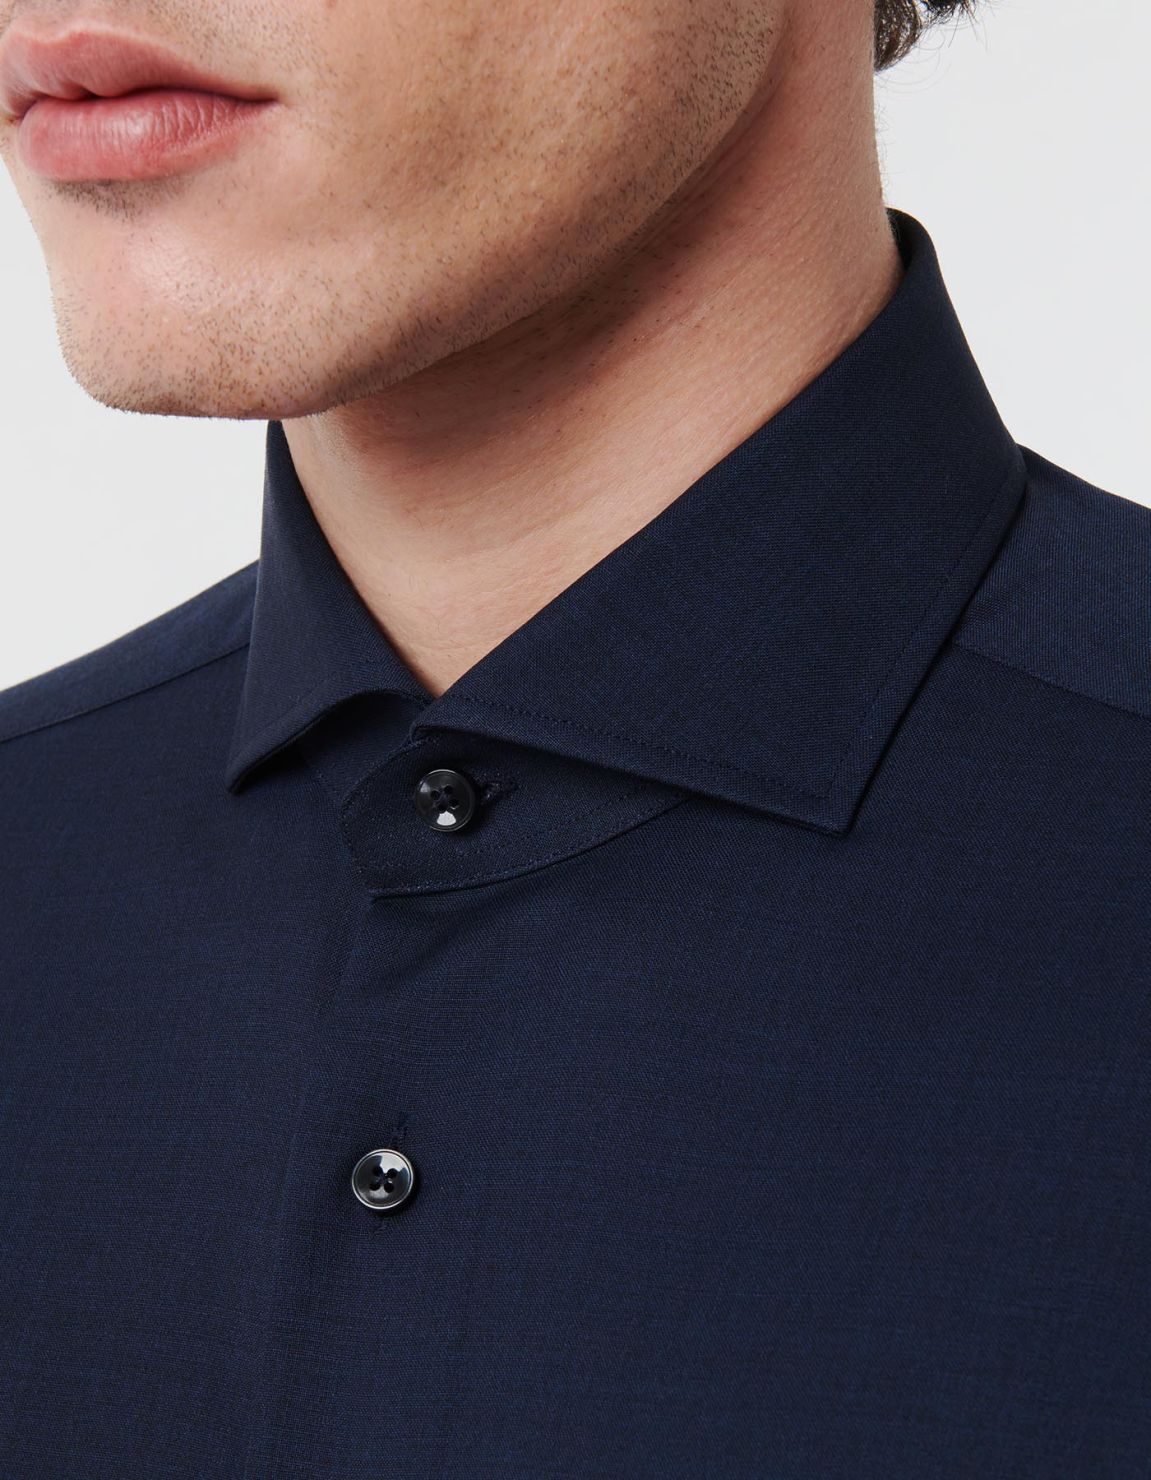 Navy Blue Canvas Solid colour Shirt Collar cutaway Tailor Custom Fit 2